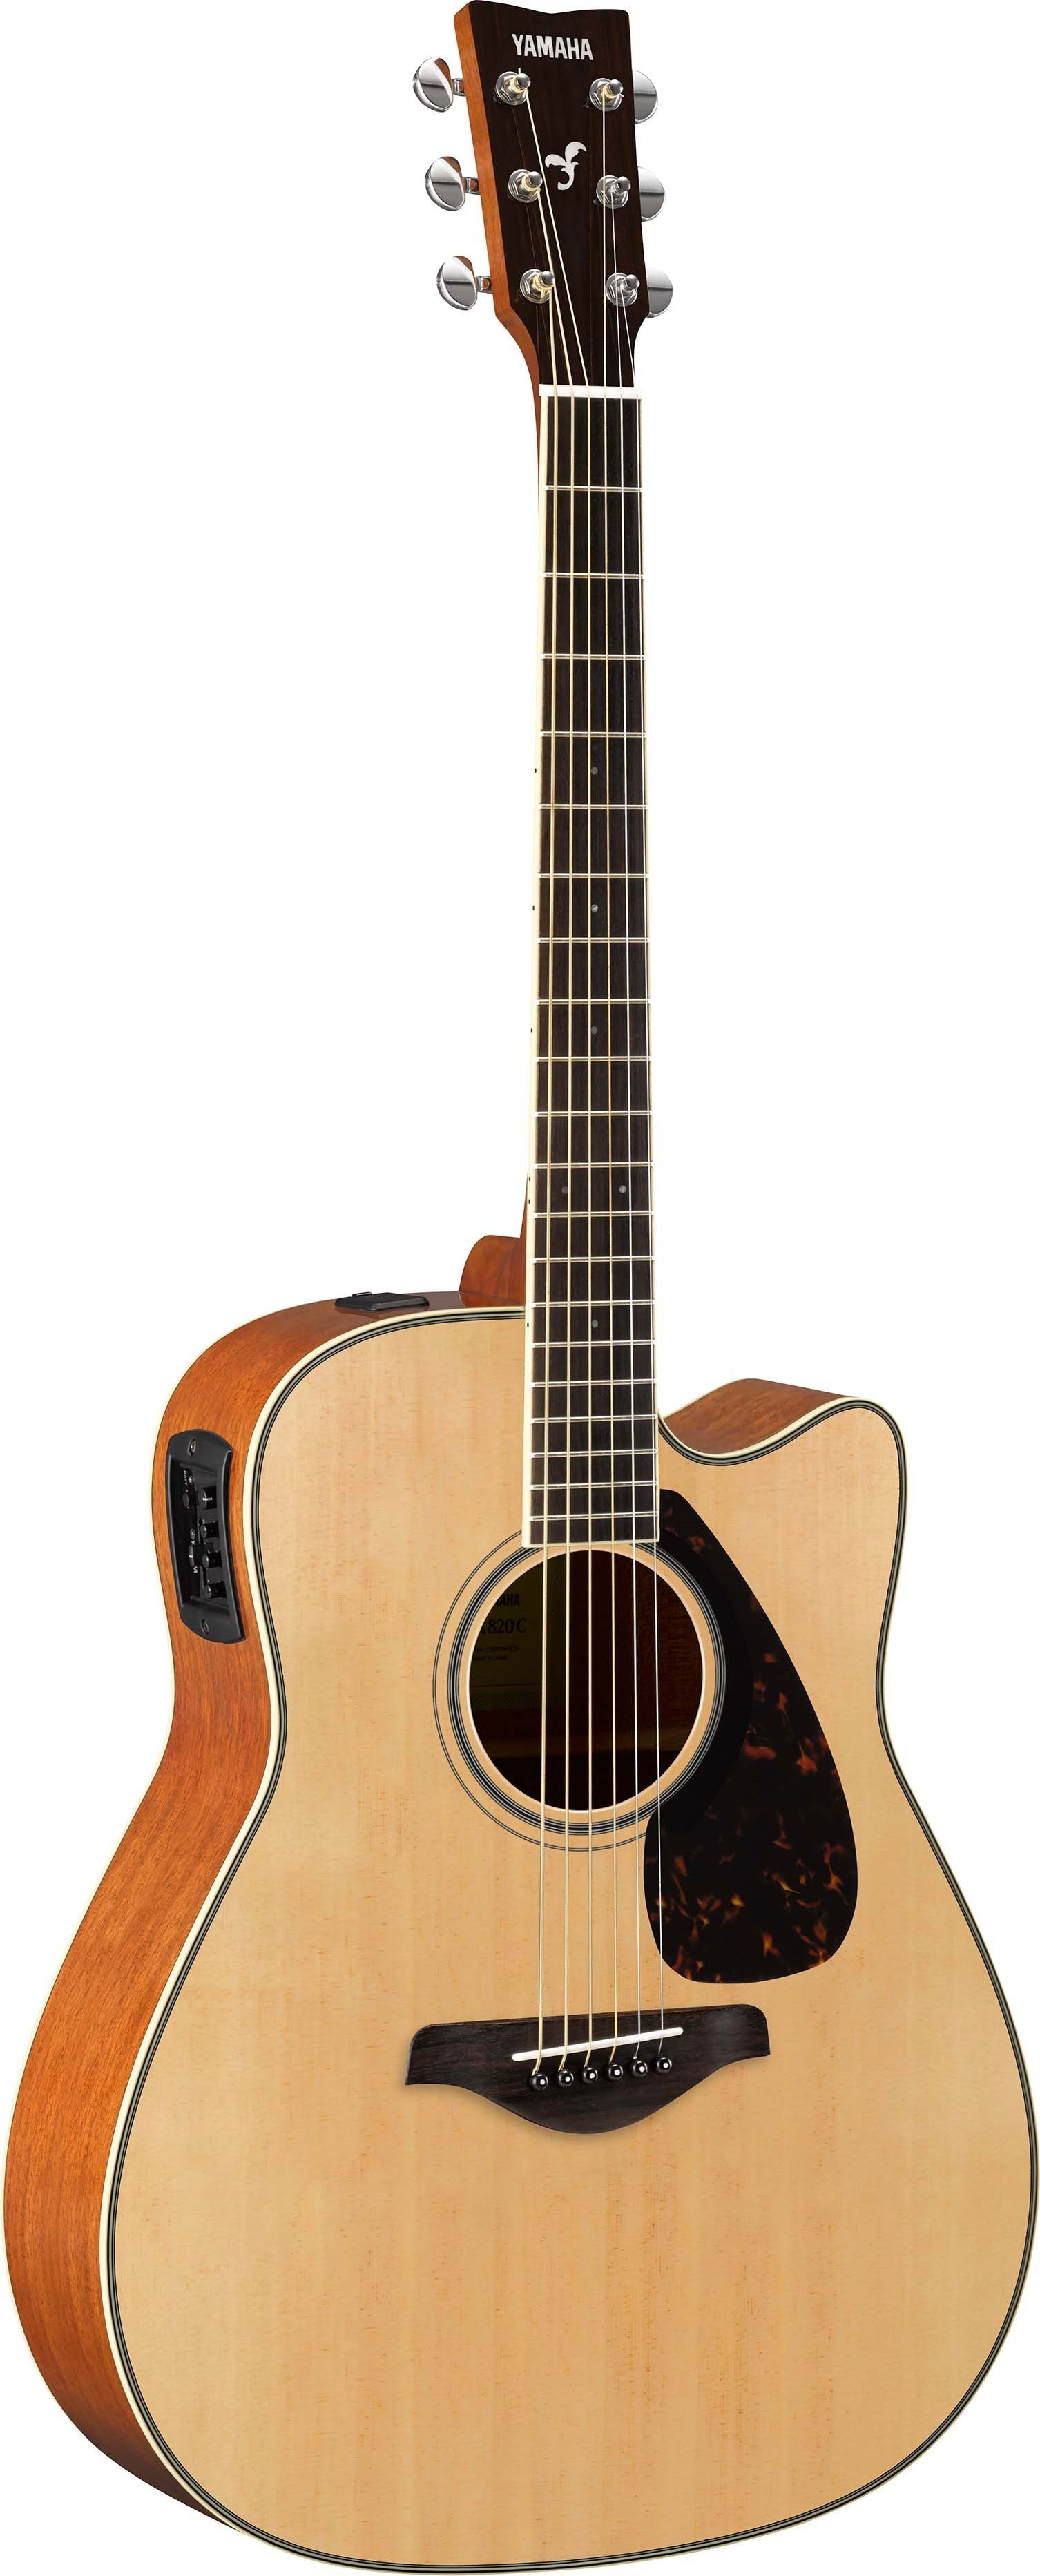 Se Yamaha Western Guitar FGX820C (Natur) hos Allround Musik